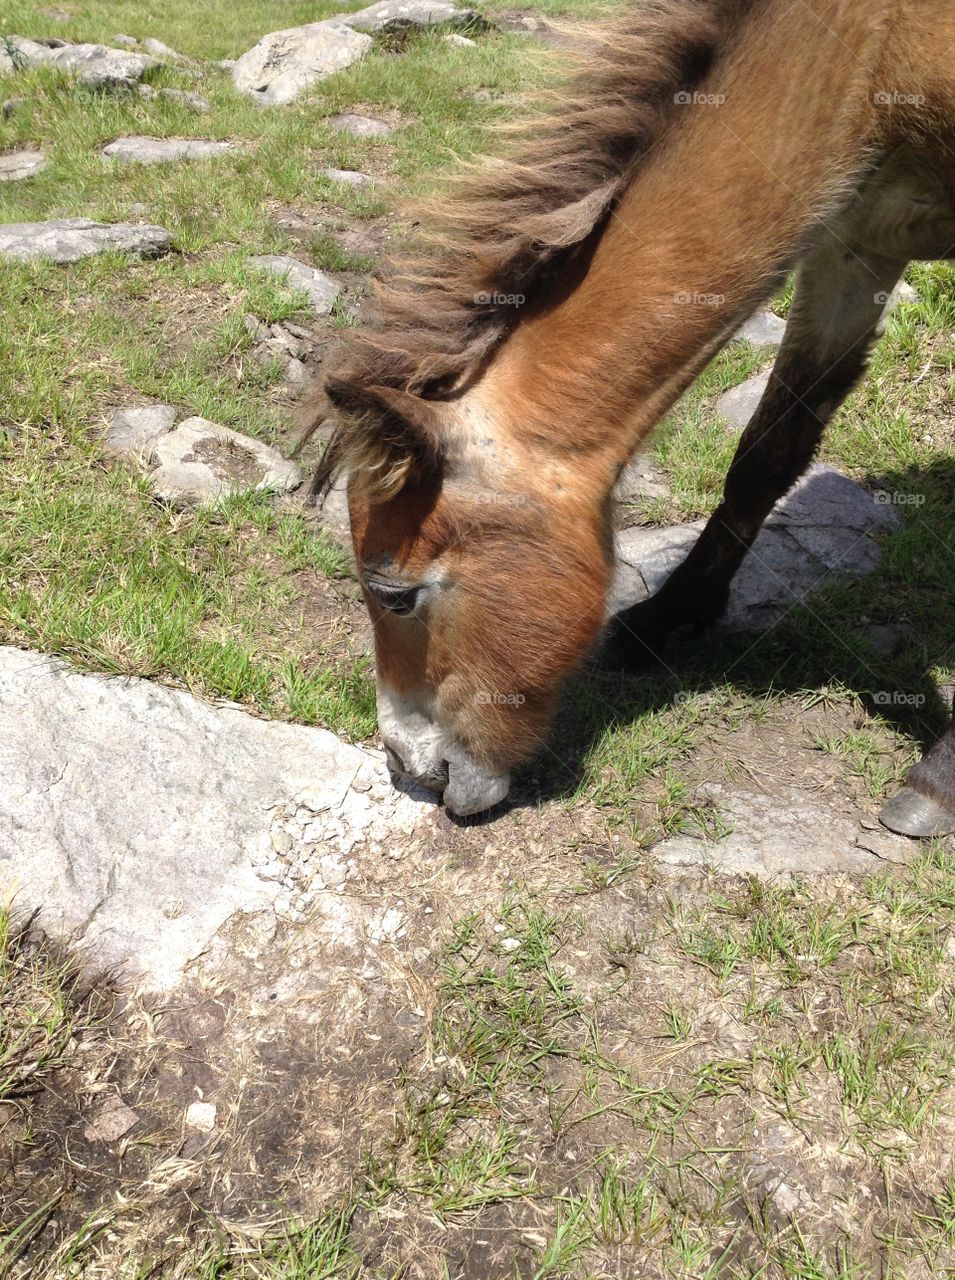 Wild pony, Highland Grayson state park, Va.